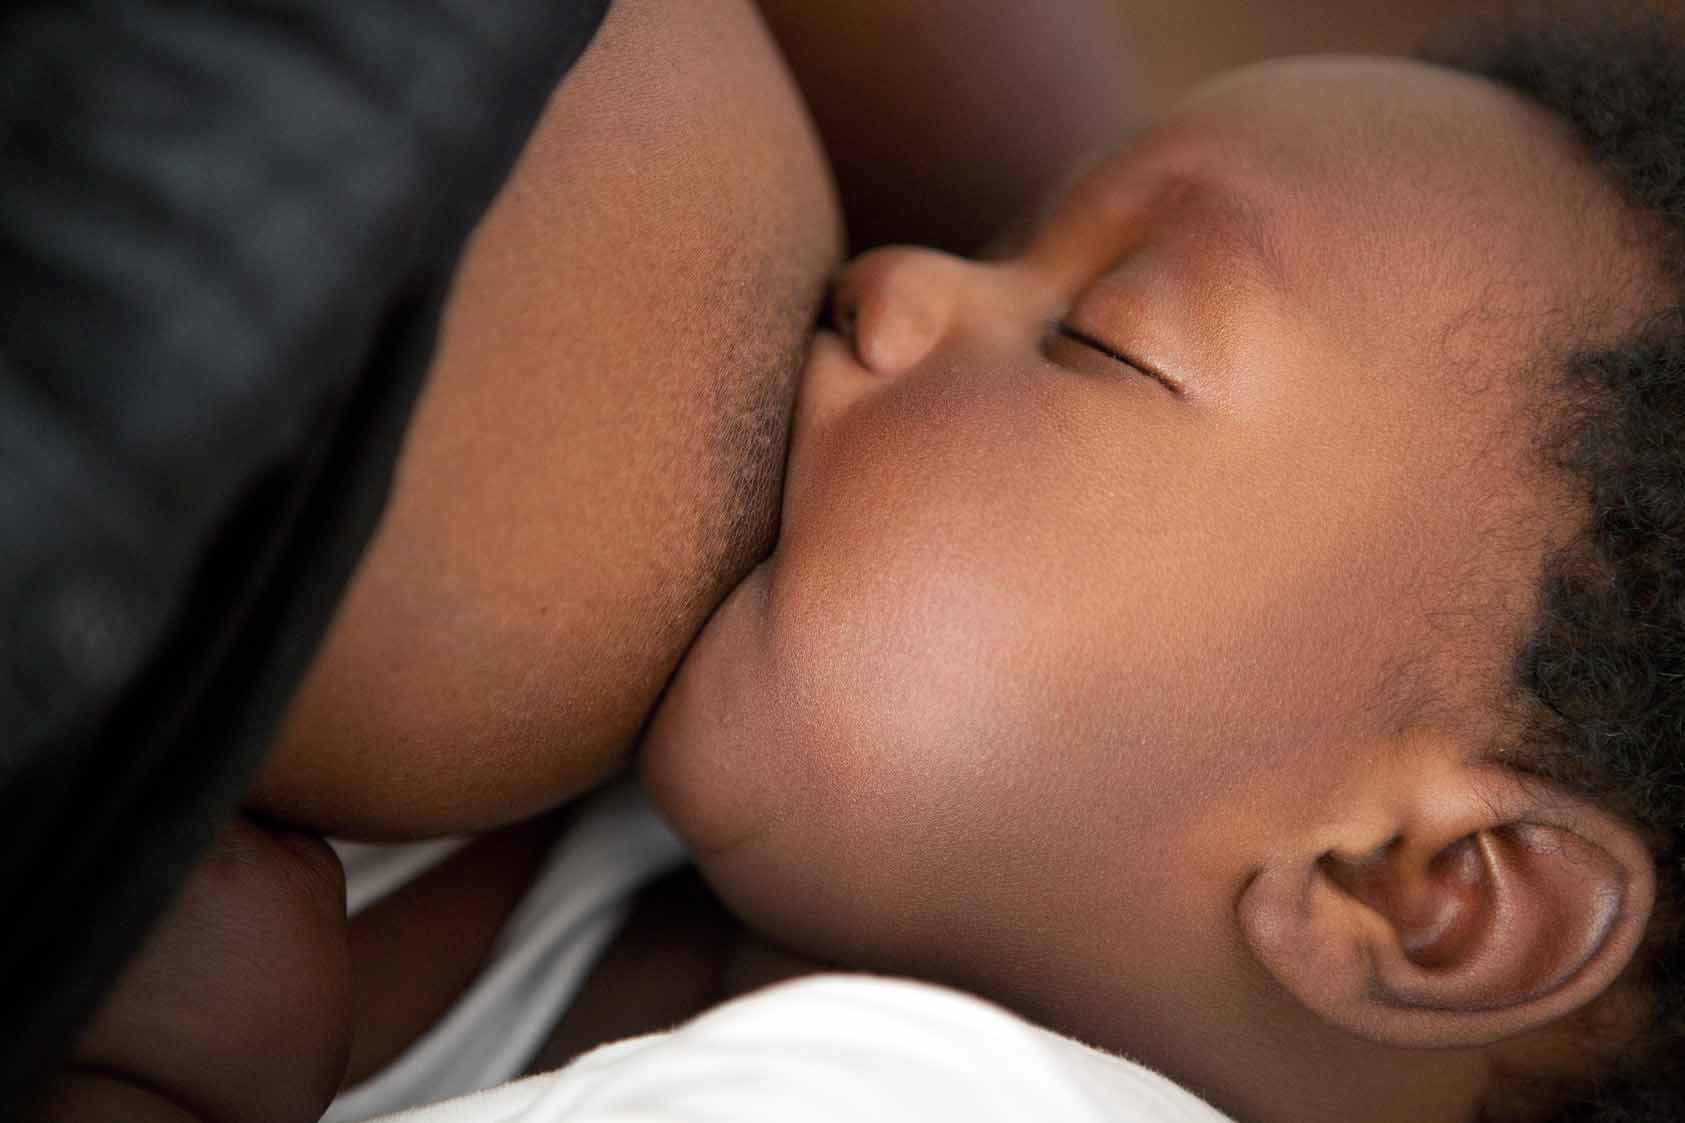 Baby suck milk from nipple